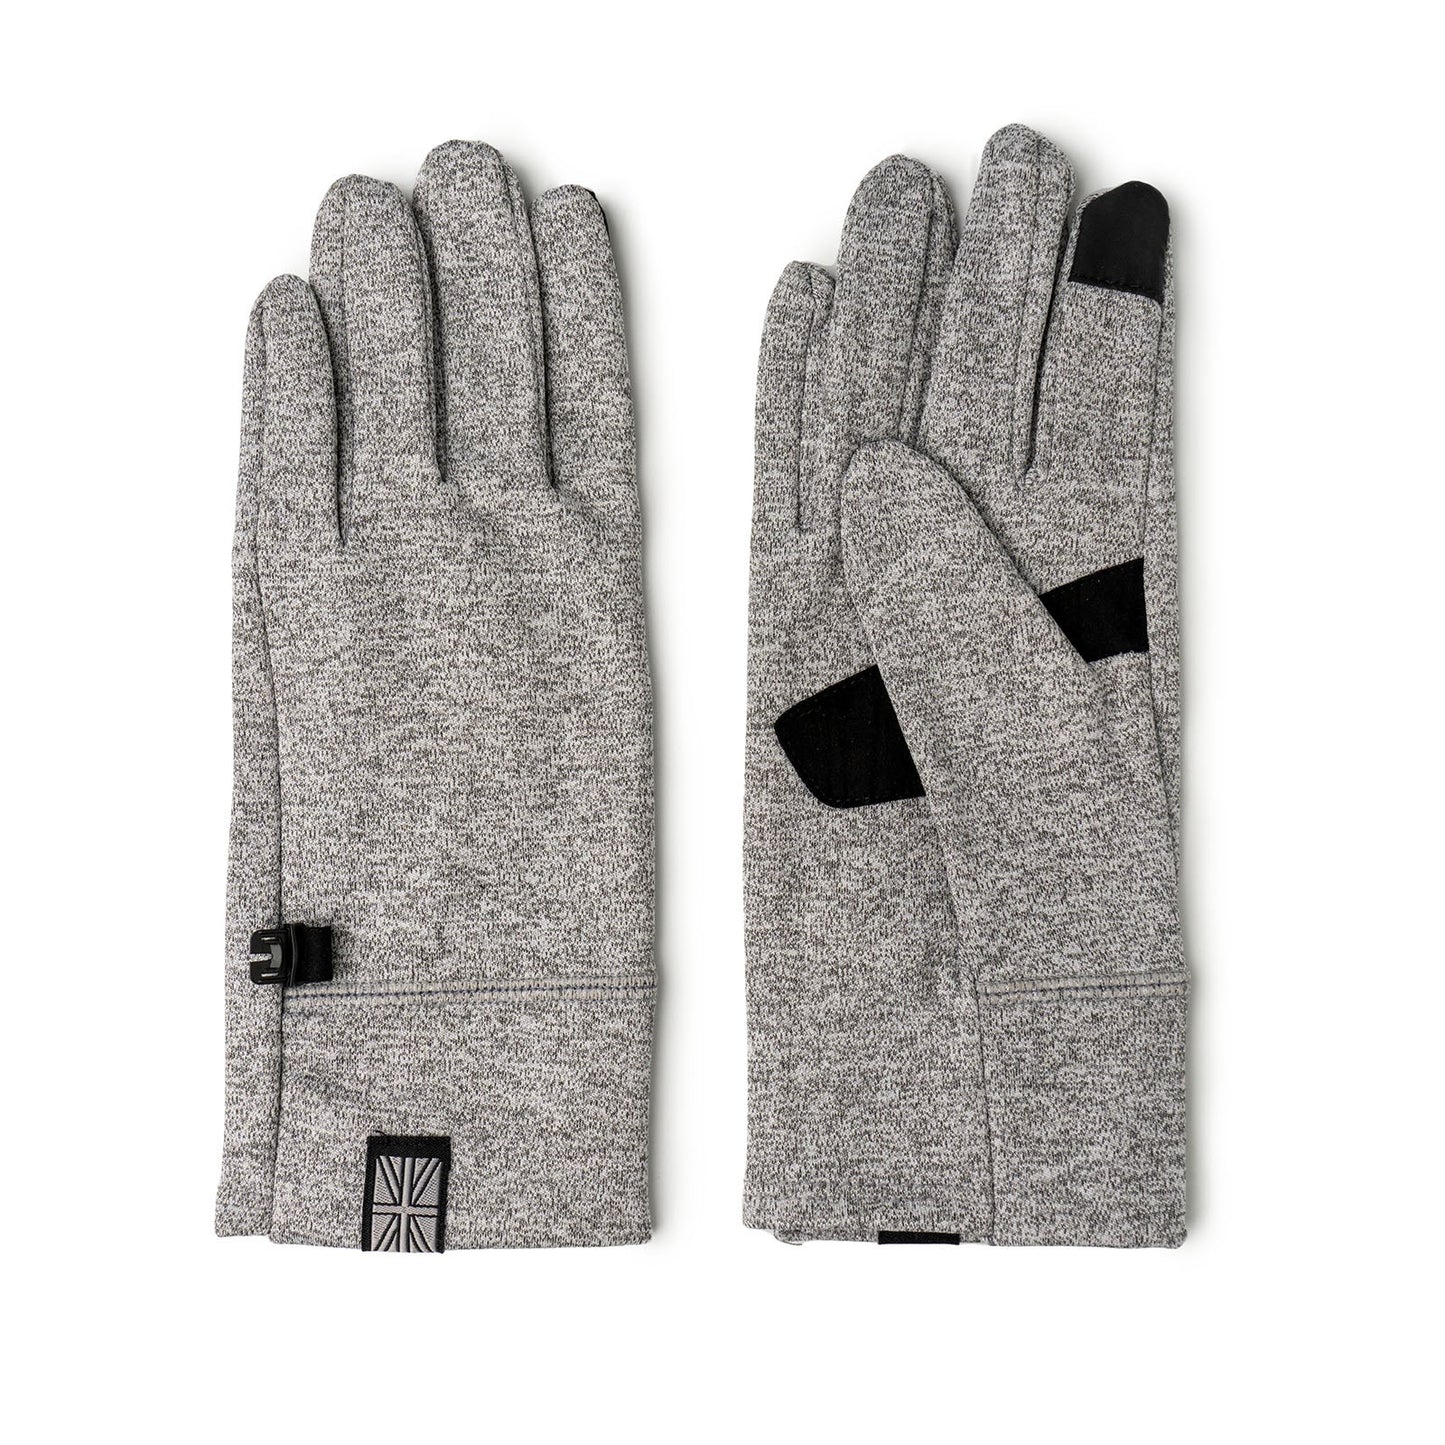 Britt's Knits Thermal Tech Unisex Gloves 2.0